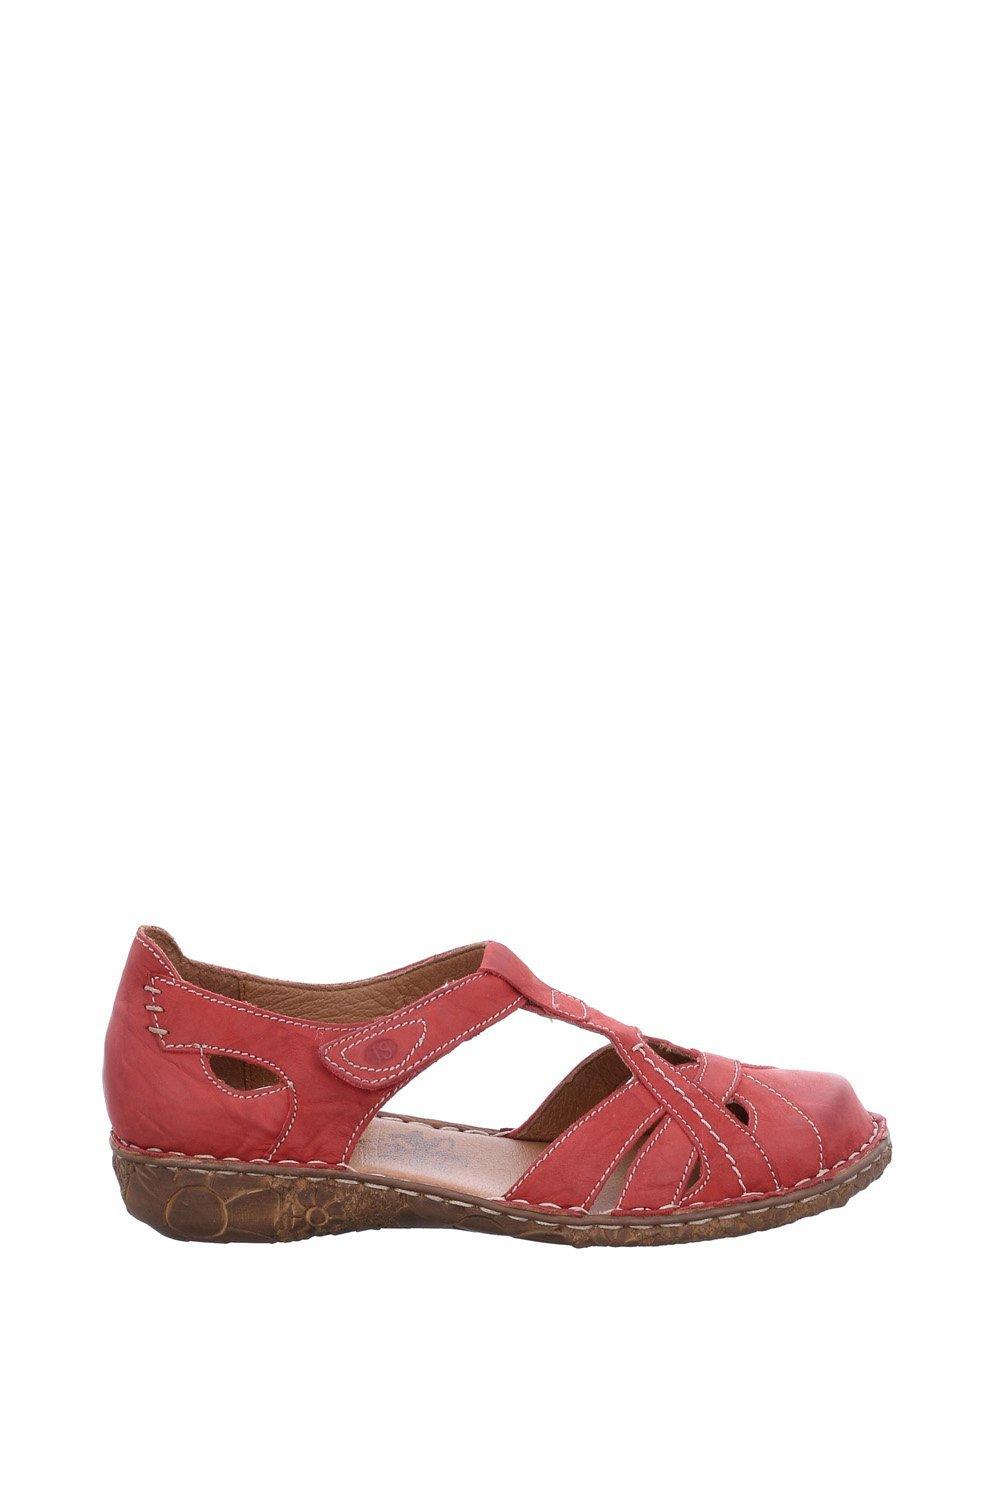 Josef Seibel Women's 'Rosalie 29' Closed Toe Sandals|Size: 6|red